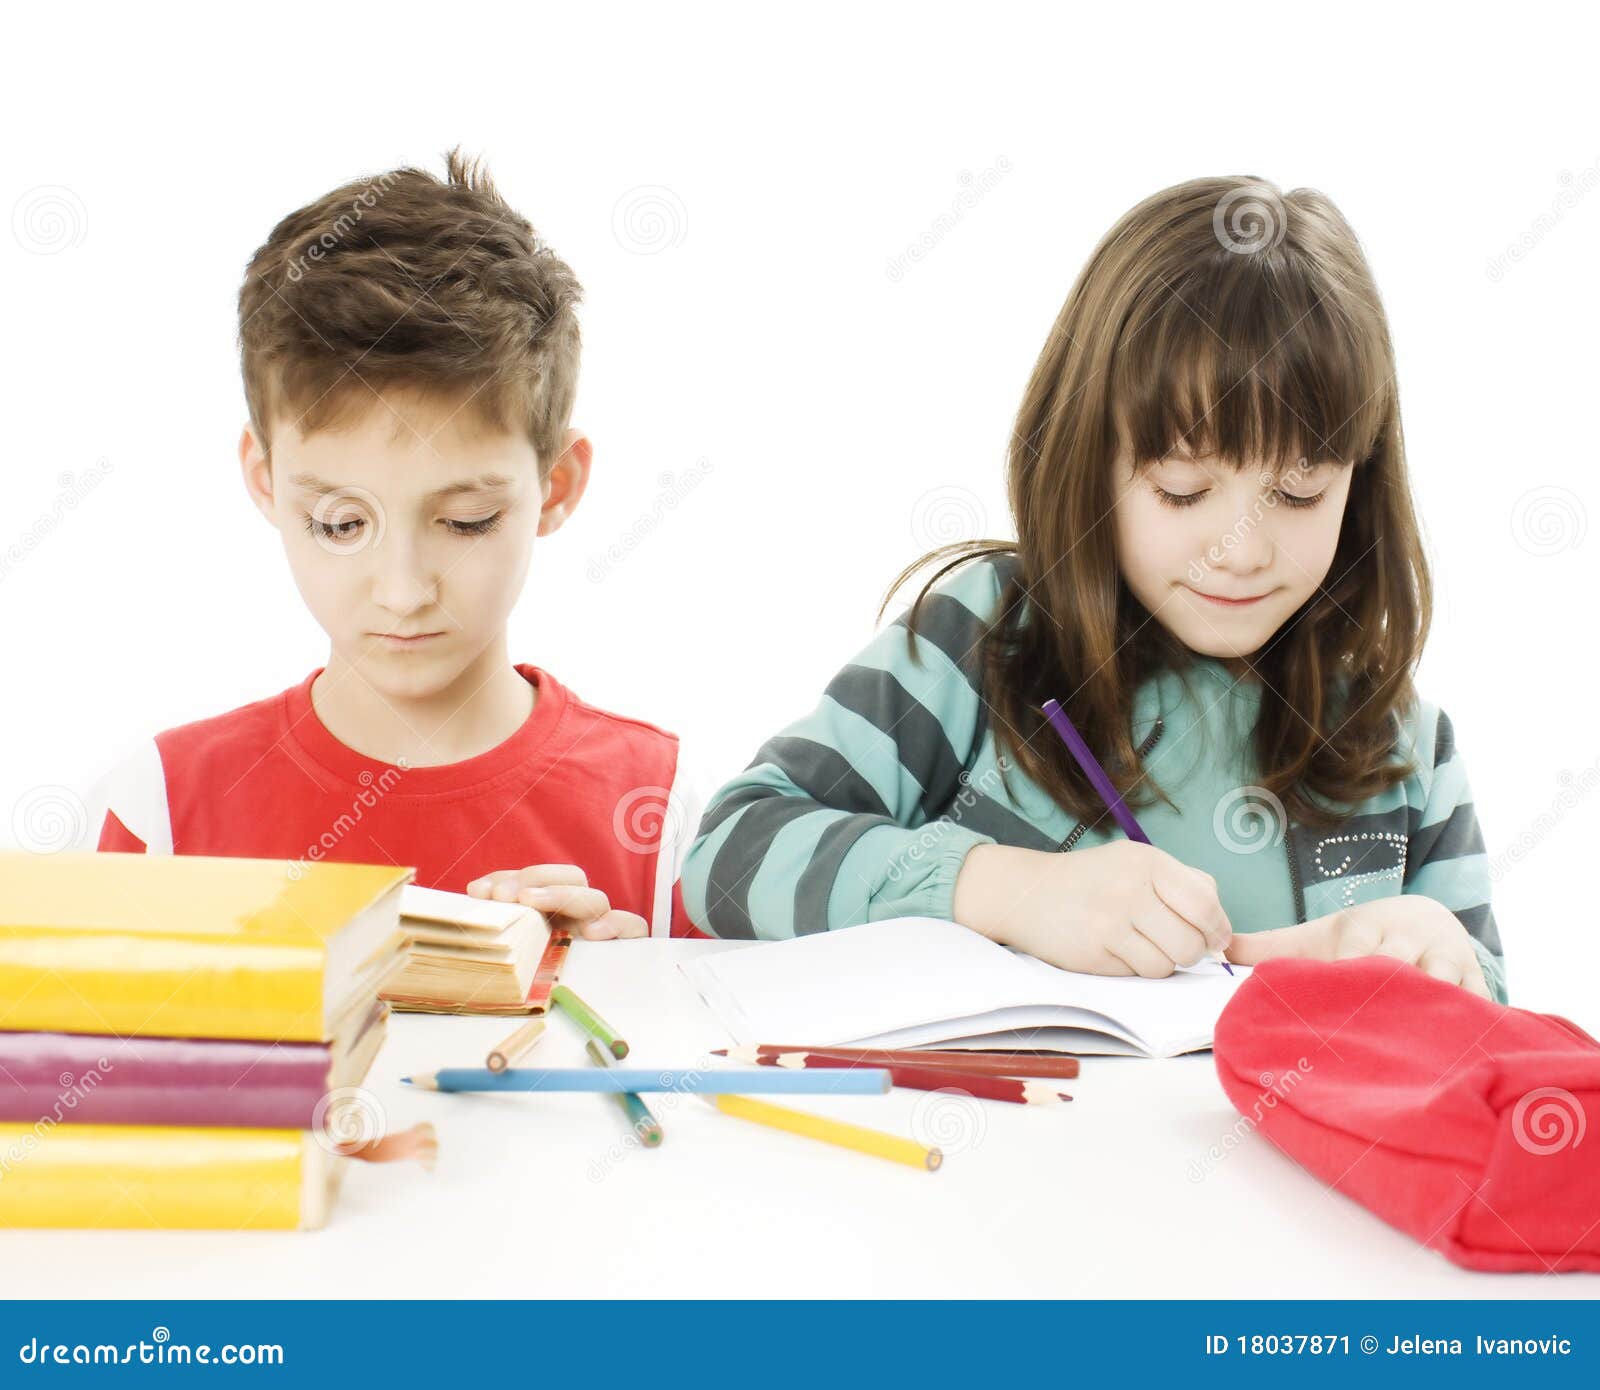 boy and girl doing homework